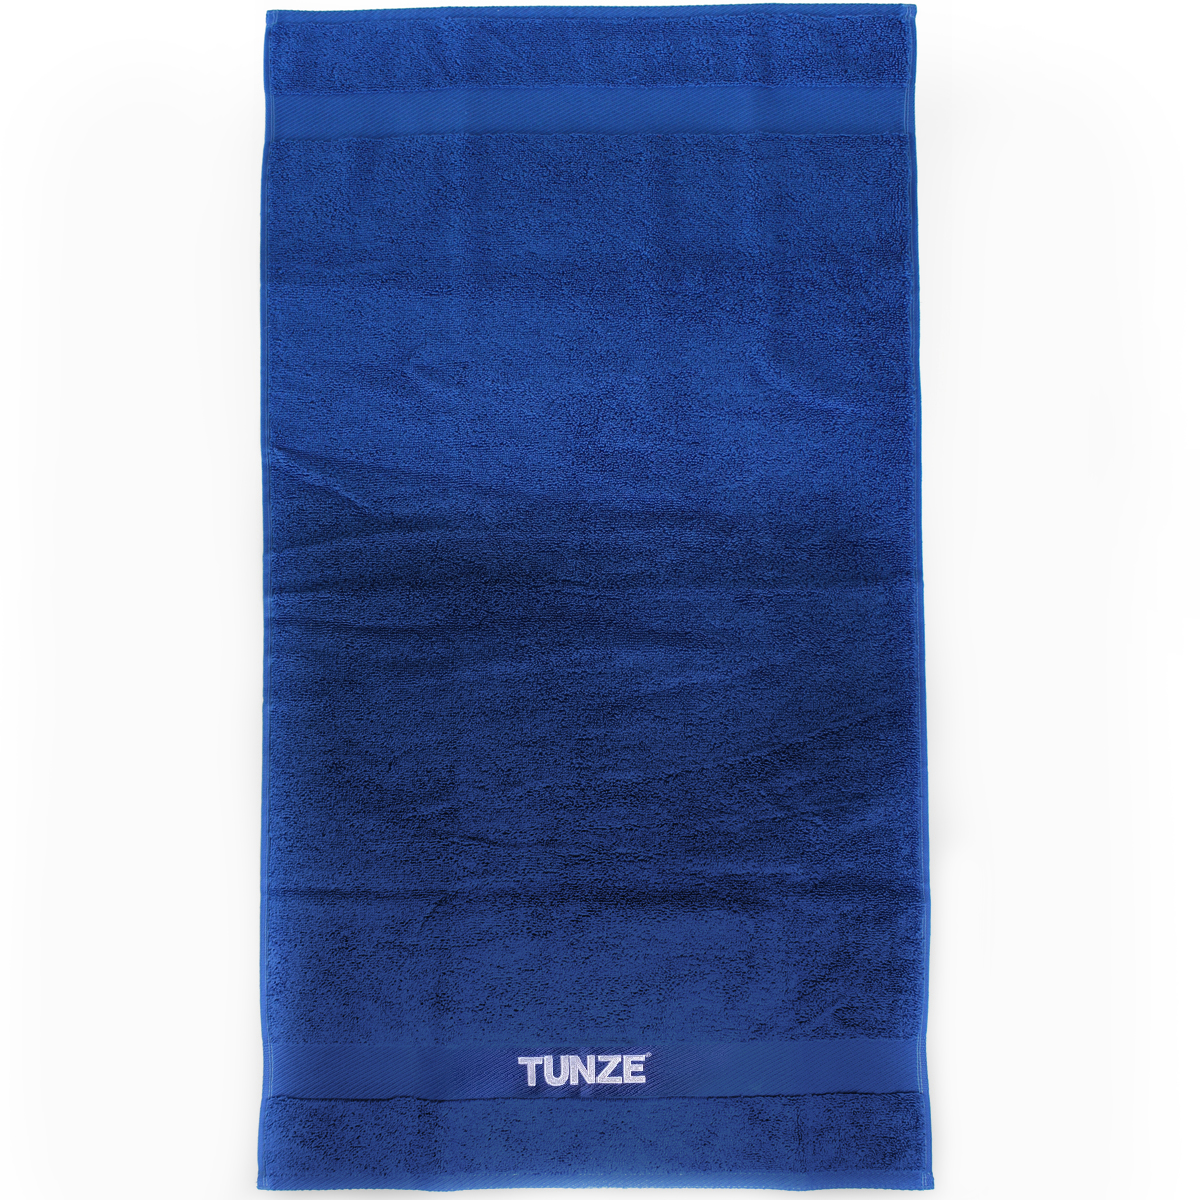 TUNZE® towel, 50 x 90 cm, 550 g/m²